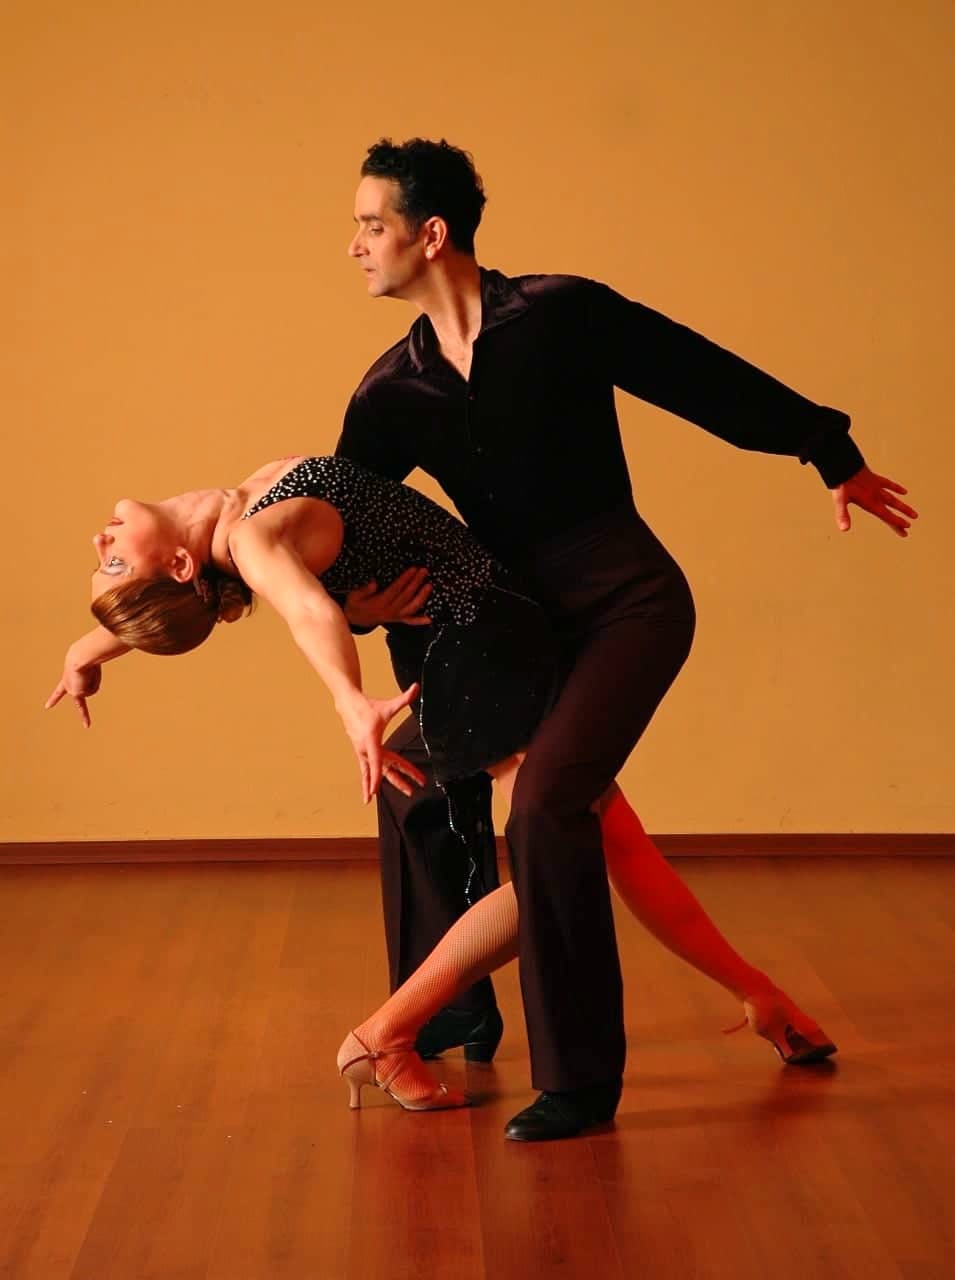 Dance,Performing arts,Dancer,Entertainment,Dancesport,Choreography,Tango,Latin dance,Salsa dance,Ballroom dance